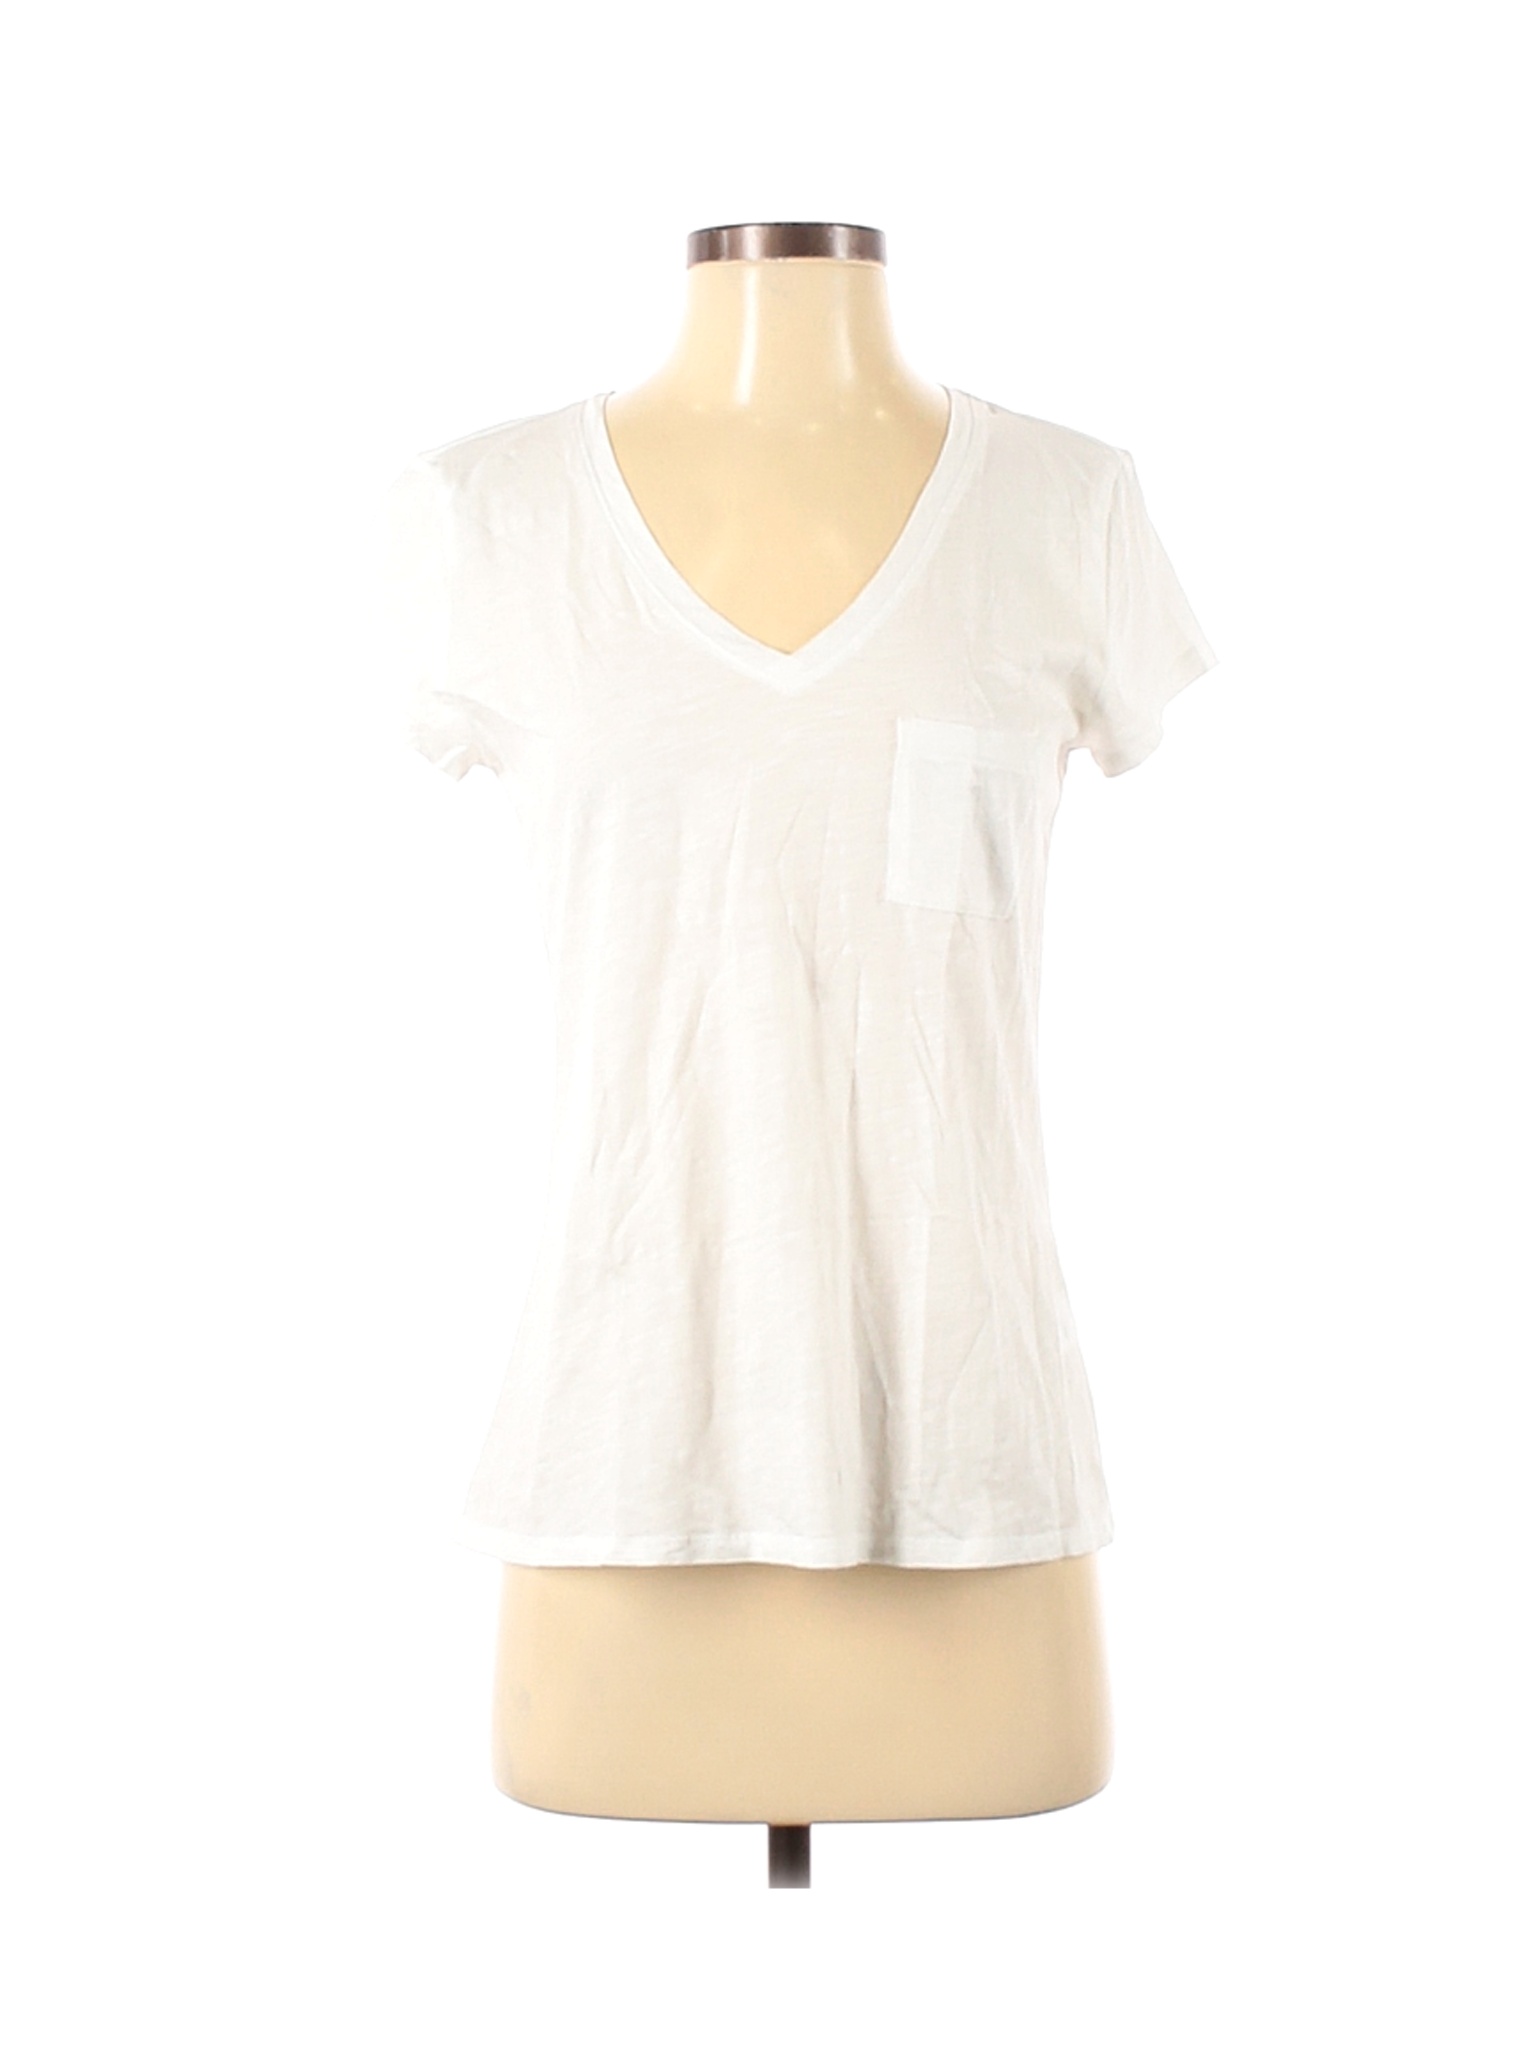 Garnet Hill Women White Short Sleeve T-Shirt XS | eBay